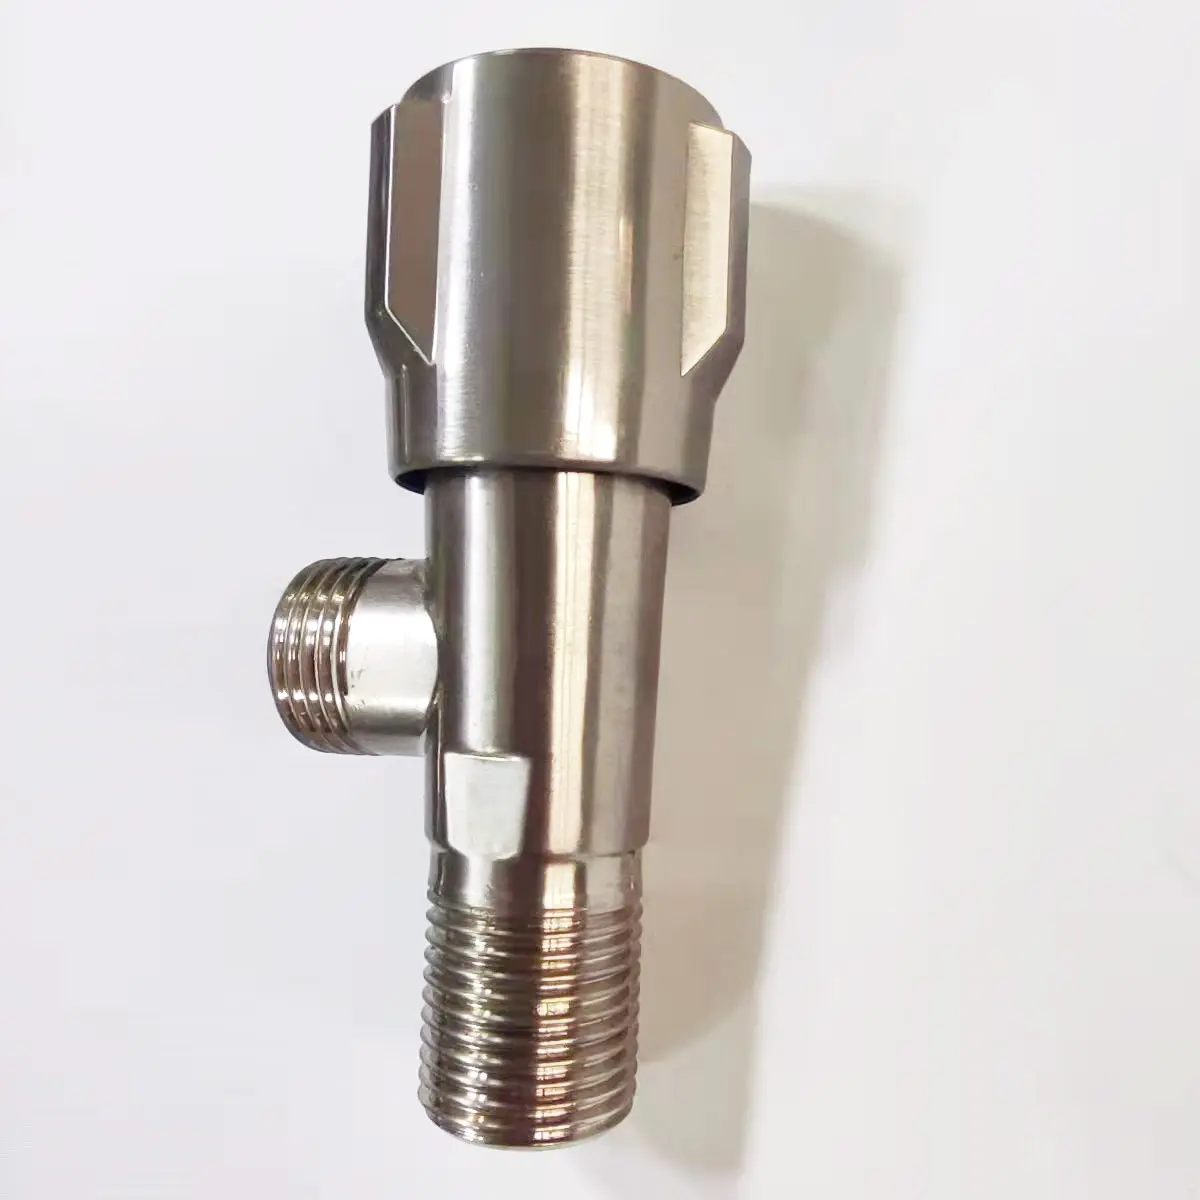 China CUSTOM bathroom angle valves HIGH PRESSURE zinc/brass angle valves control valves brass fittings